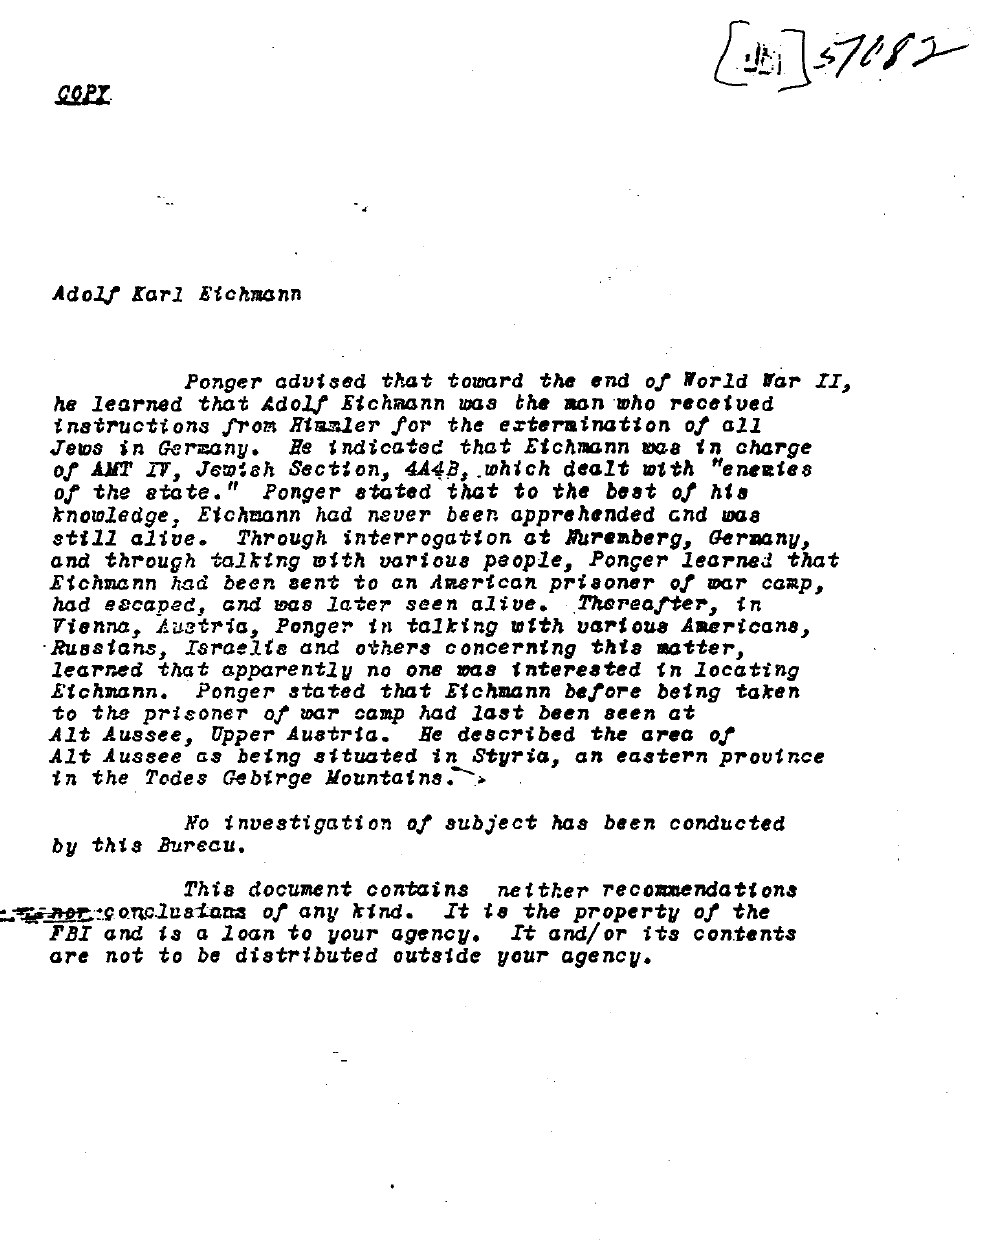 Adolf Eichmann CIA Files Sample Page 3